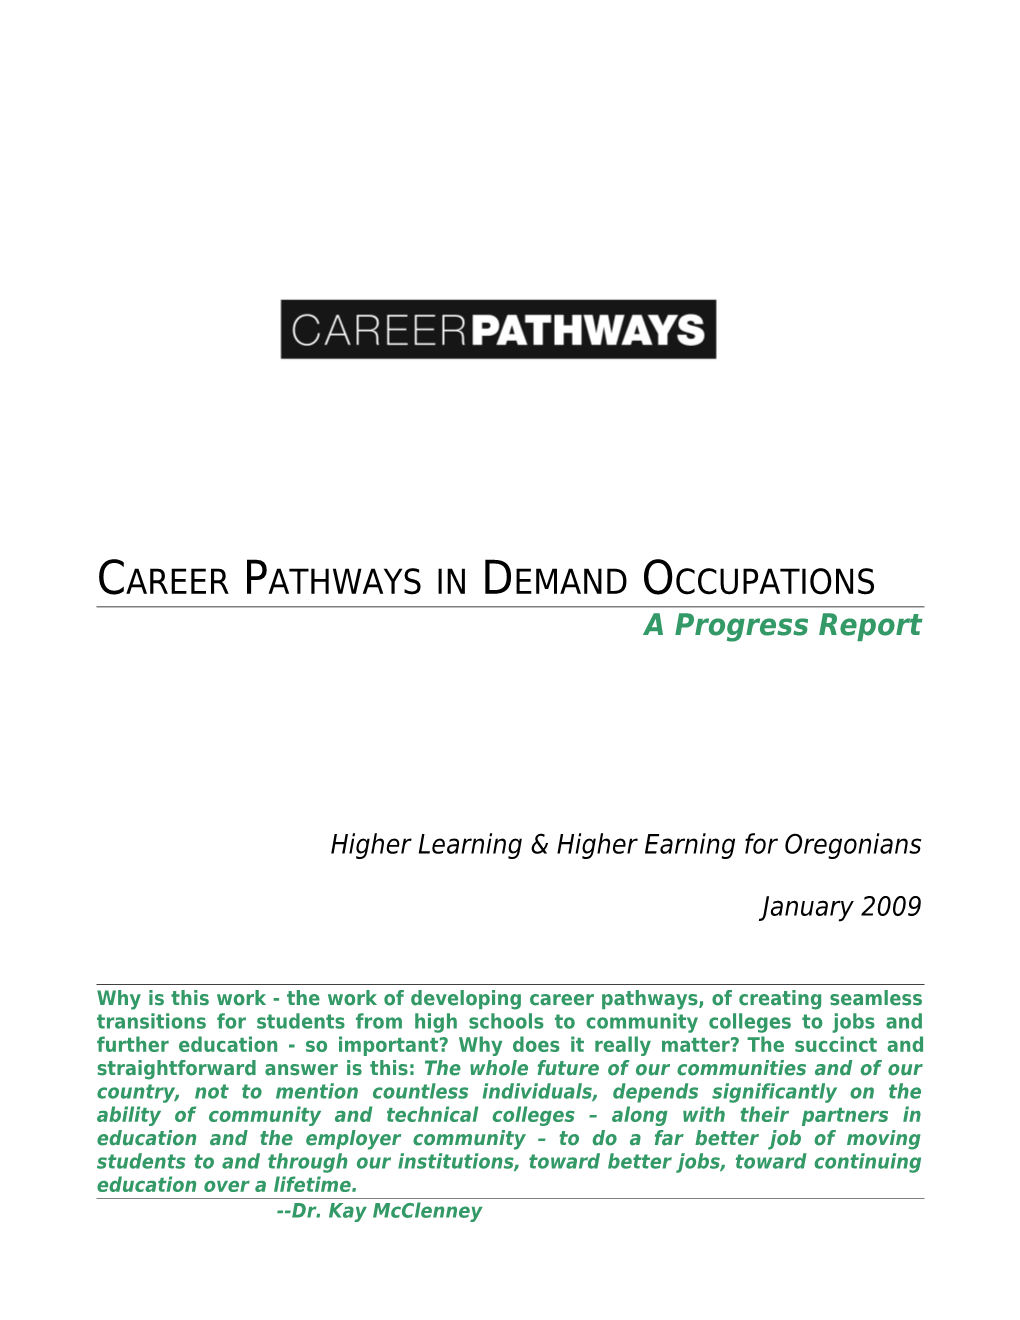 Career Pathways in Oregon